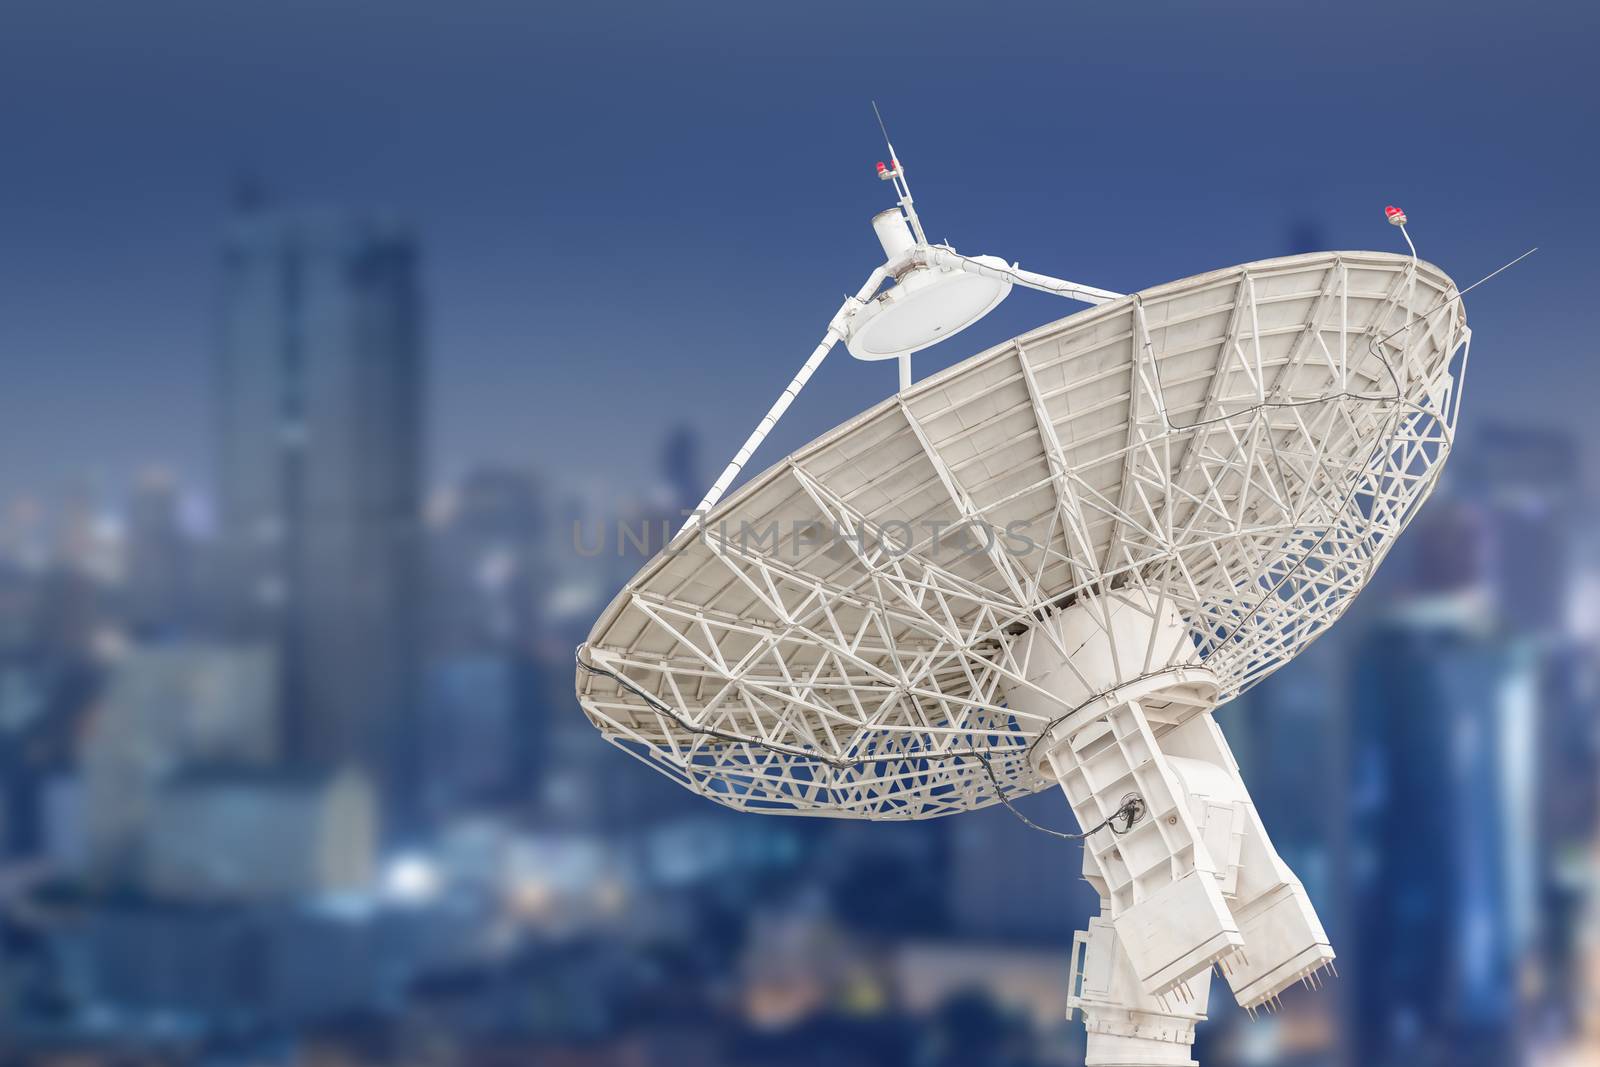 satellite dish antenna radar and building background by FrameAngel